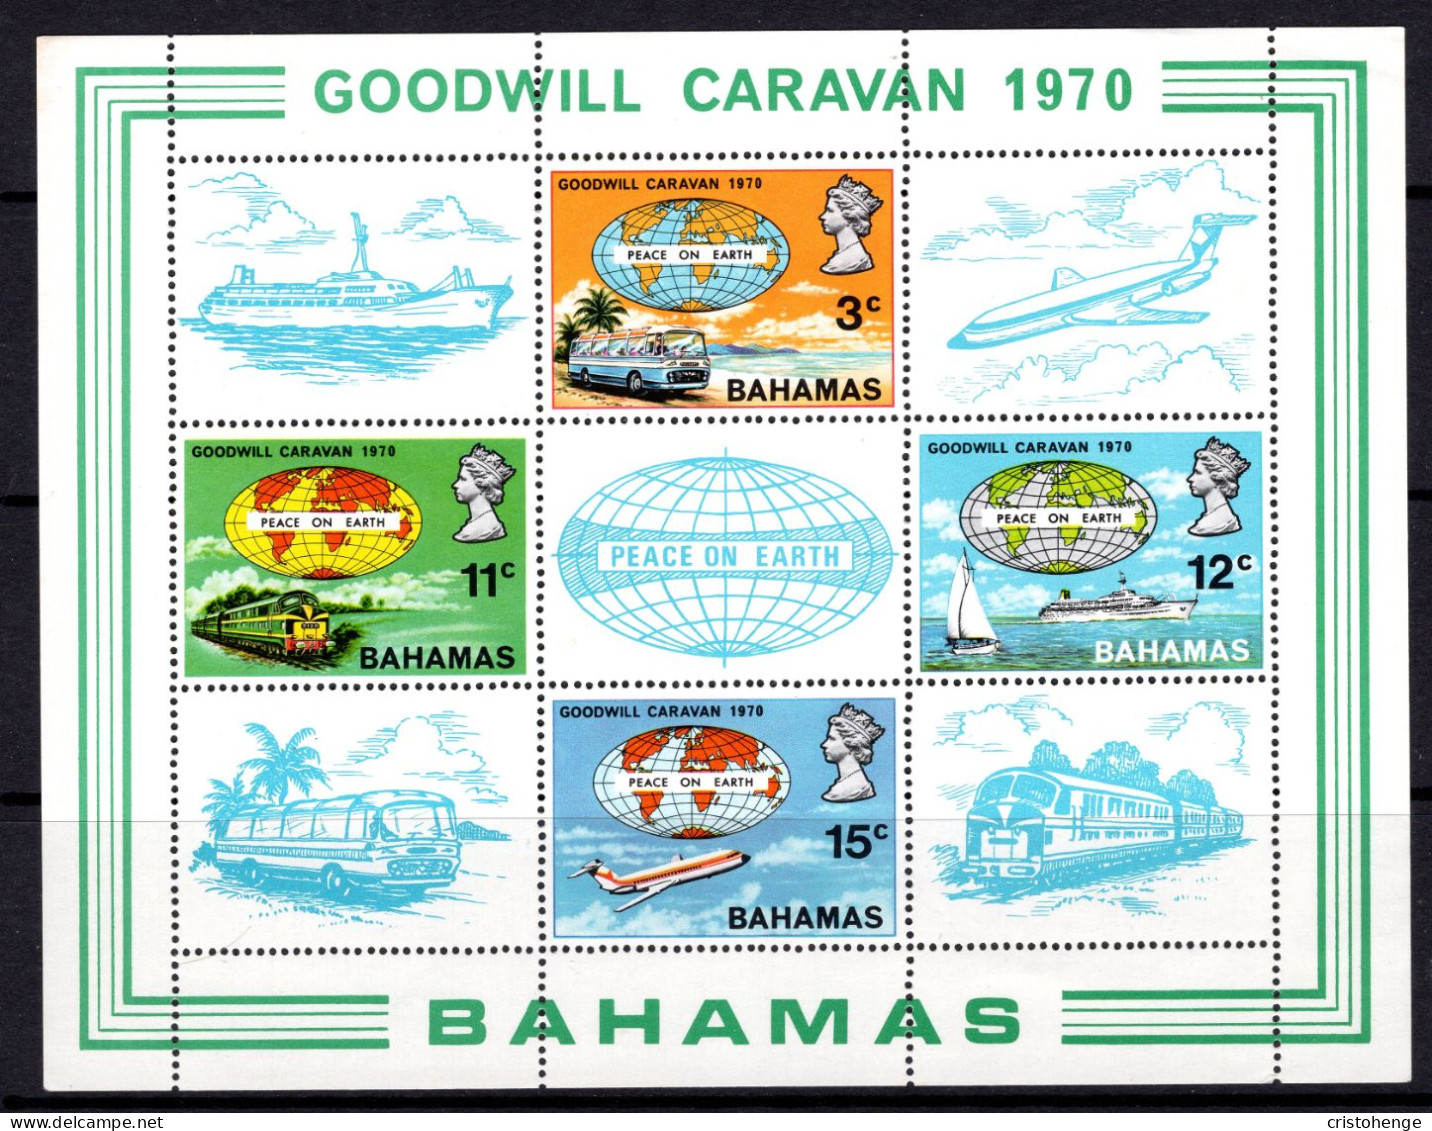 Bahamas 1970 Goodwill Caravan MS MNH (SG MS351) - 1963-1973 Autonomie Interne